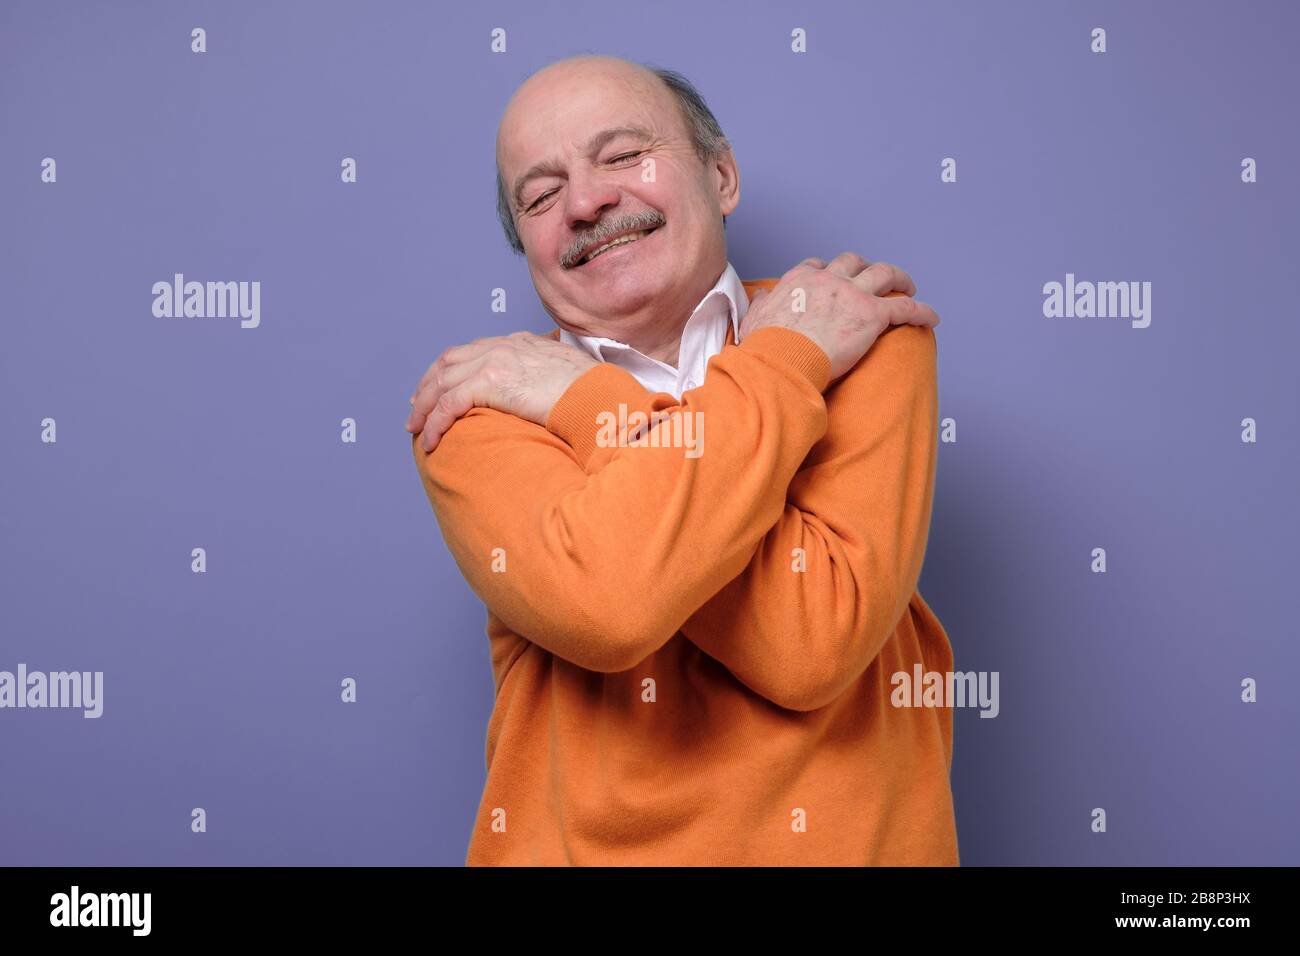 senior man hugs himself, has high self esteem feeling happy being alone. Stock Photo